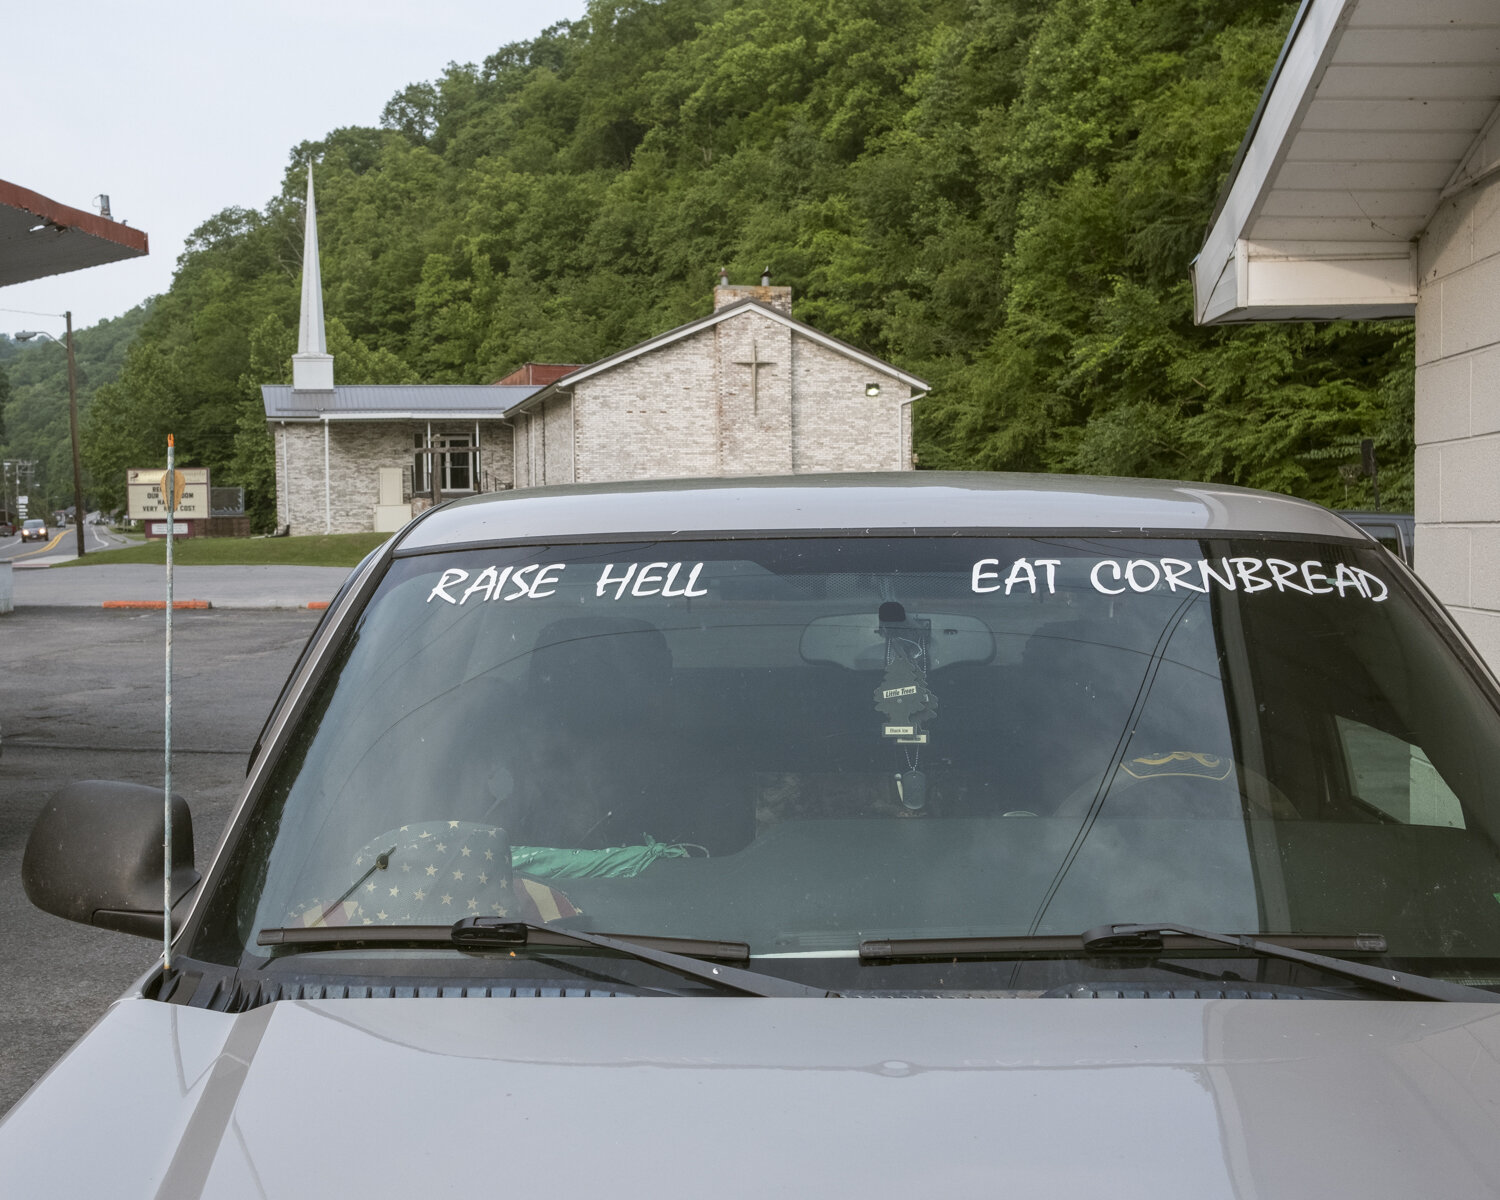  Welch, McDowell County, West Virginia. 